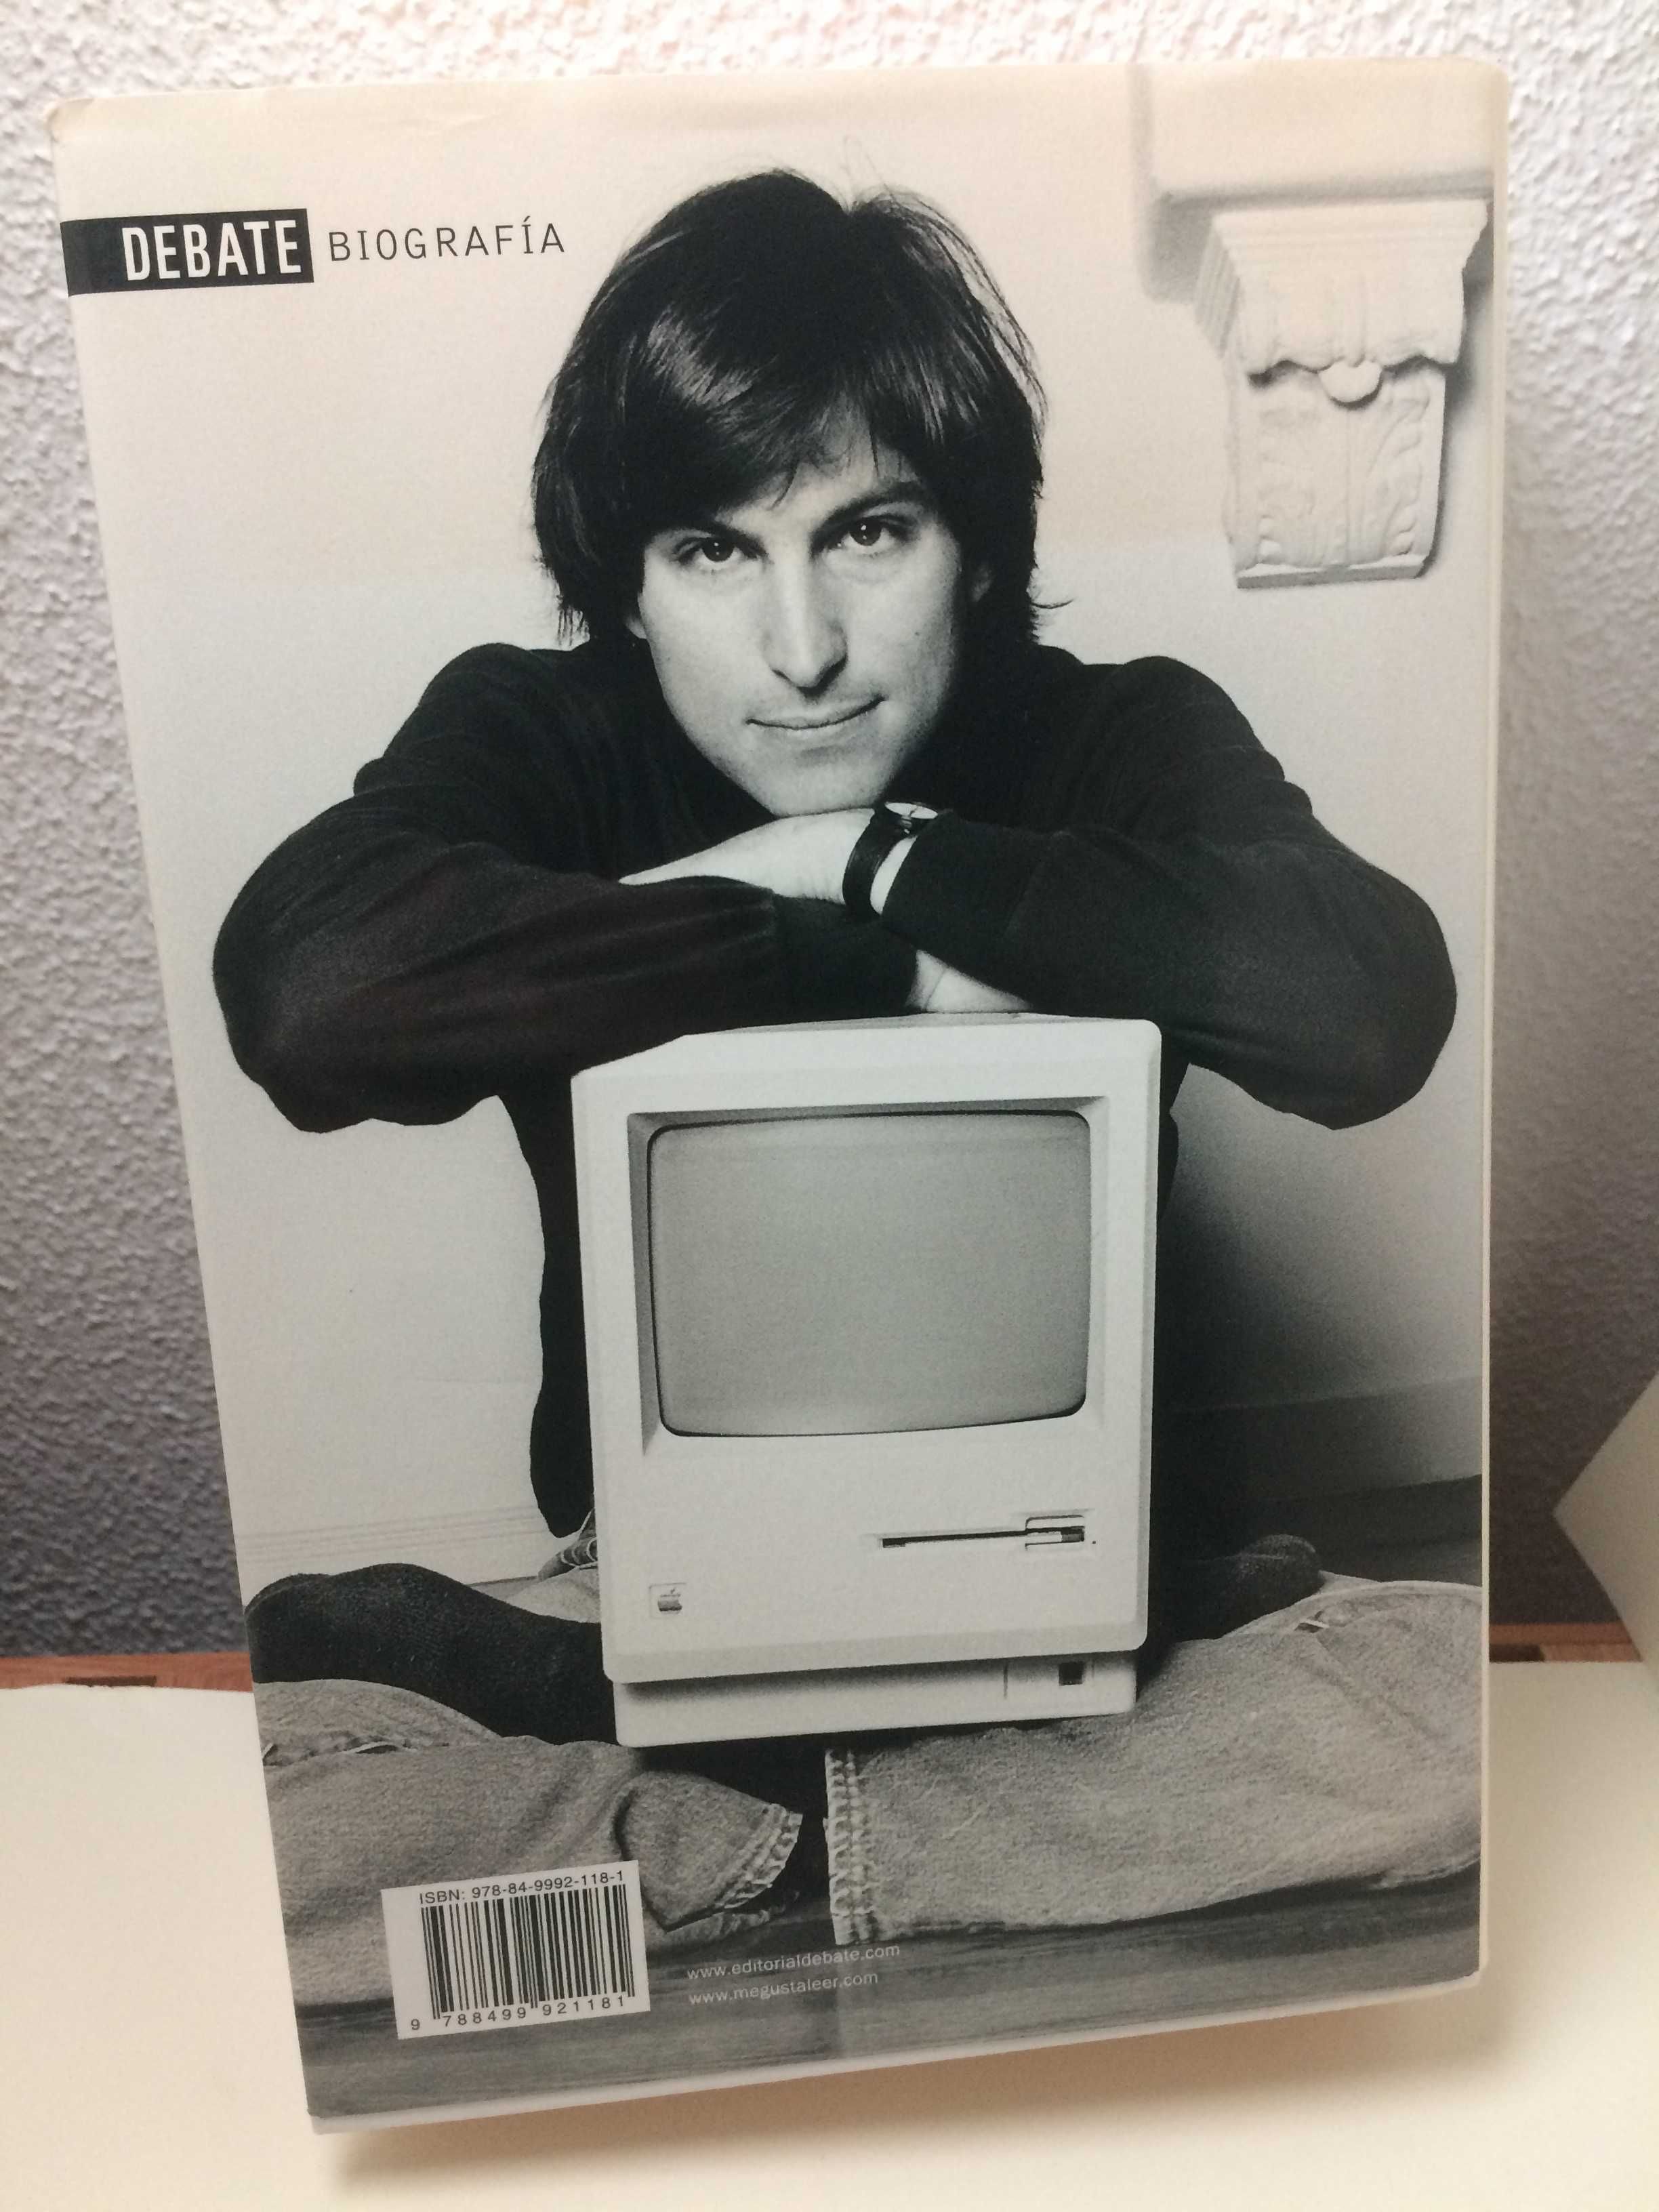 Steve Jobs, La Biografia (espanhol)